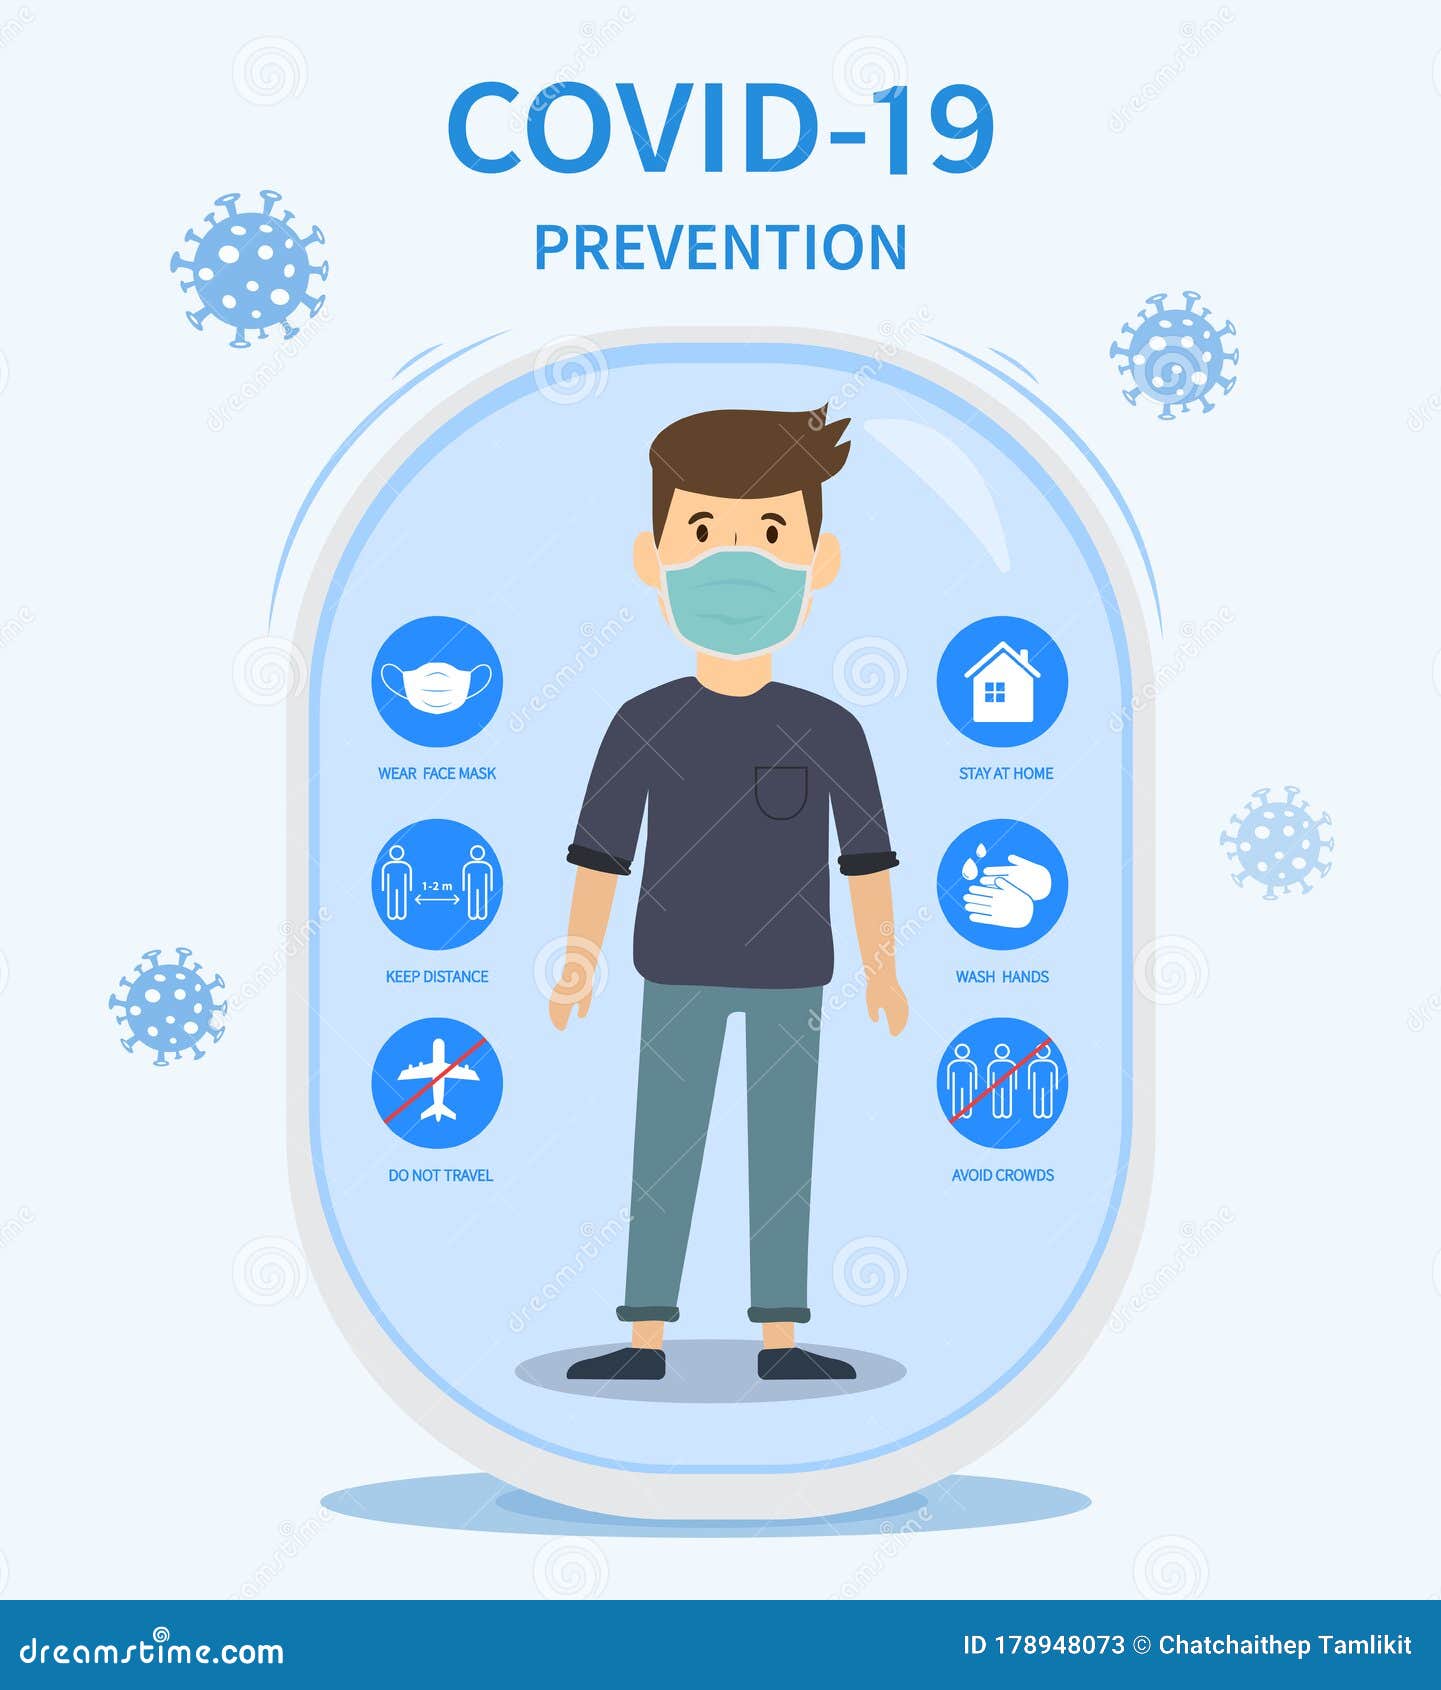 covid-19 prevention and quarantine precaution infographic during the coronavirus epidemic.